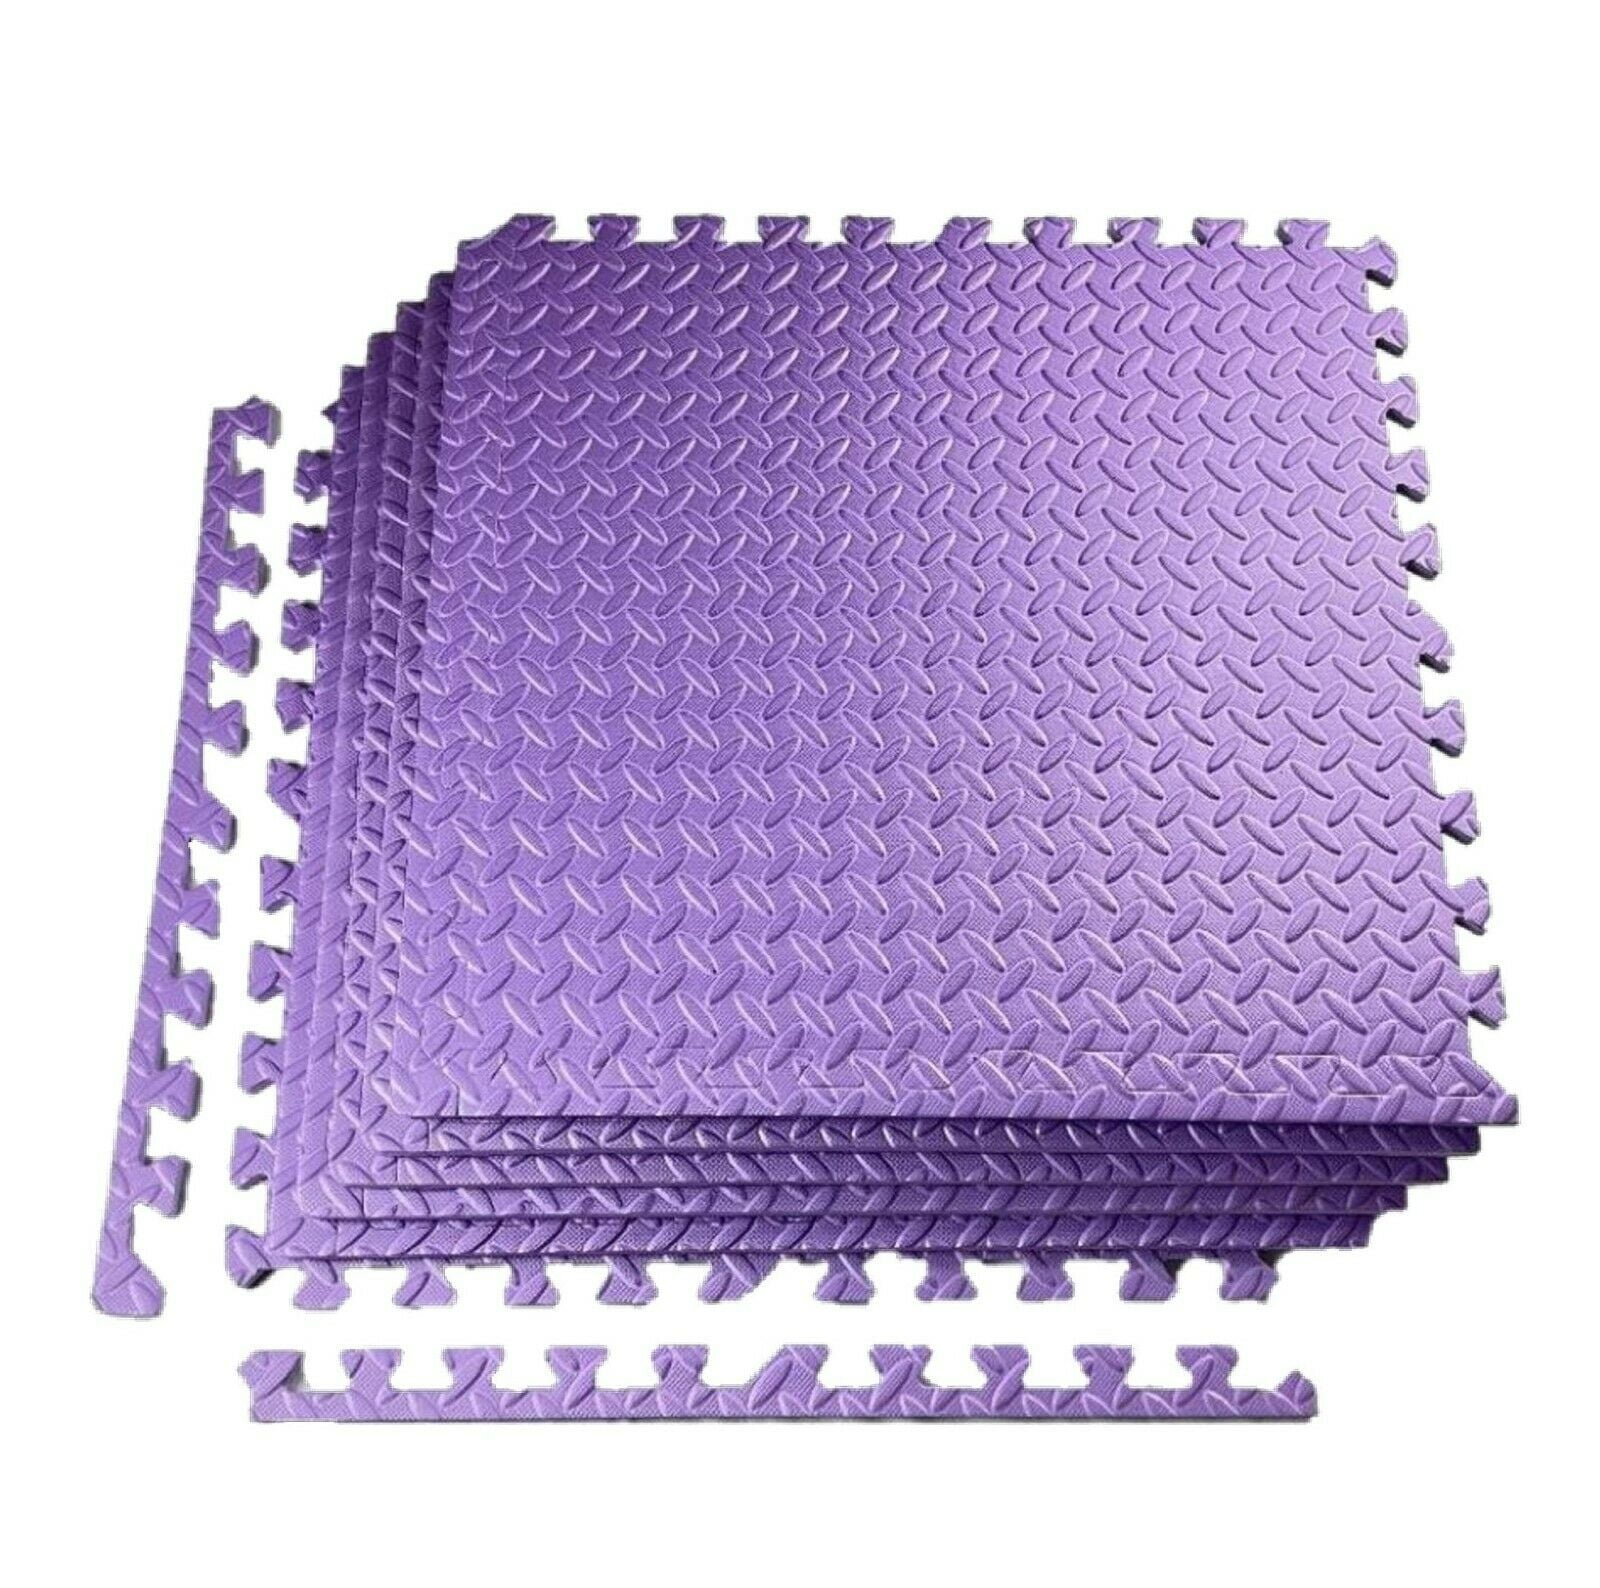 216 sq ft pink interlocking foam floor puzzle tiles mats puzzle mat flooring 